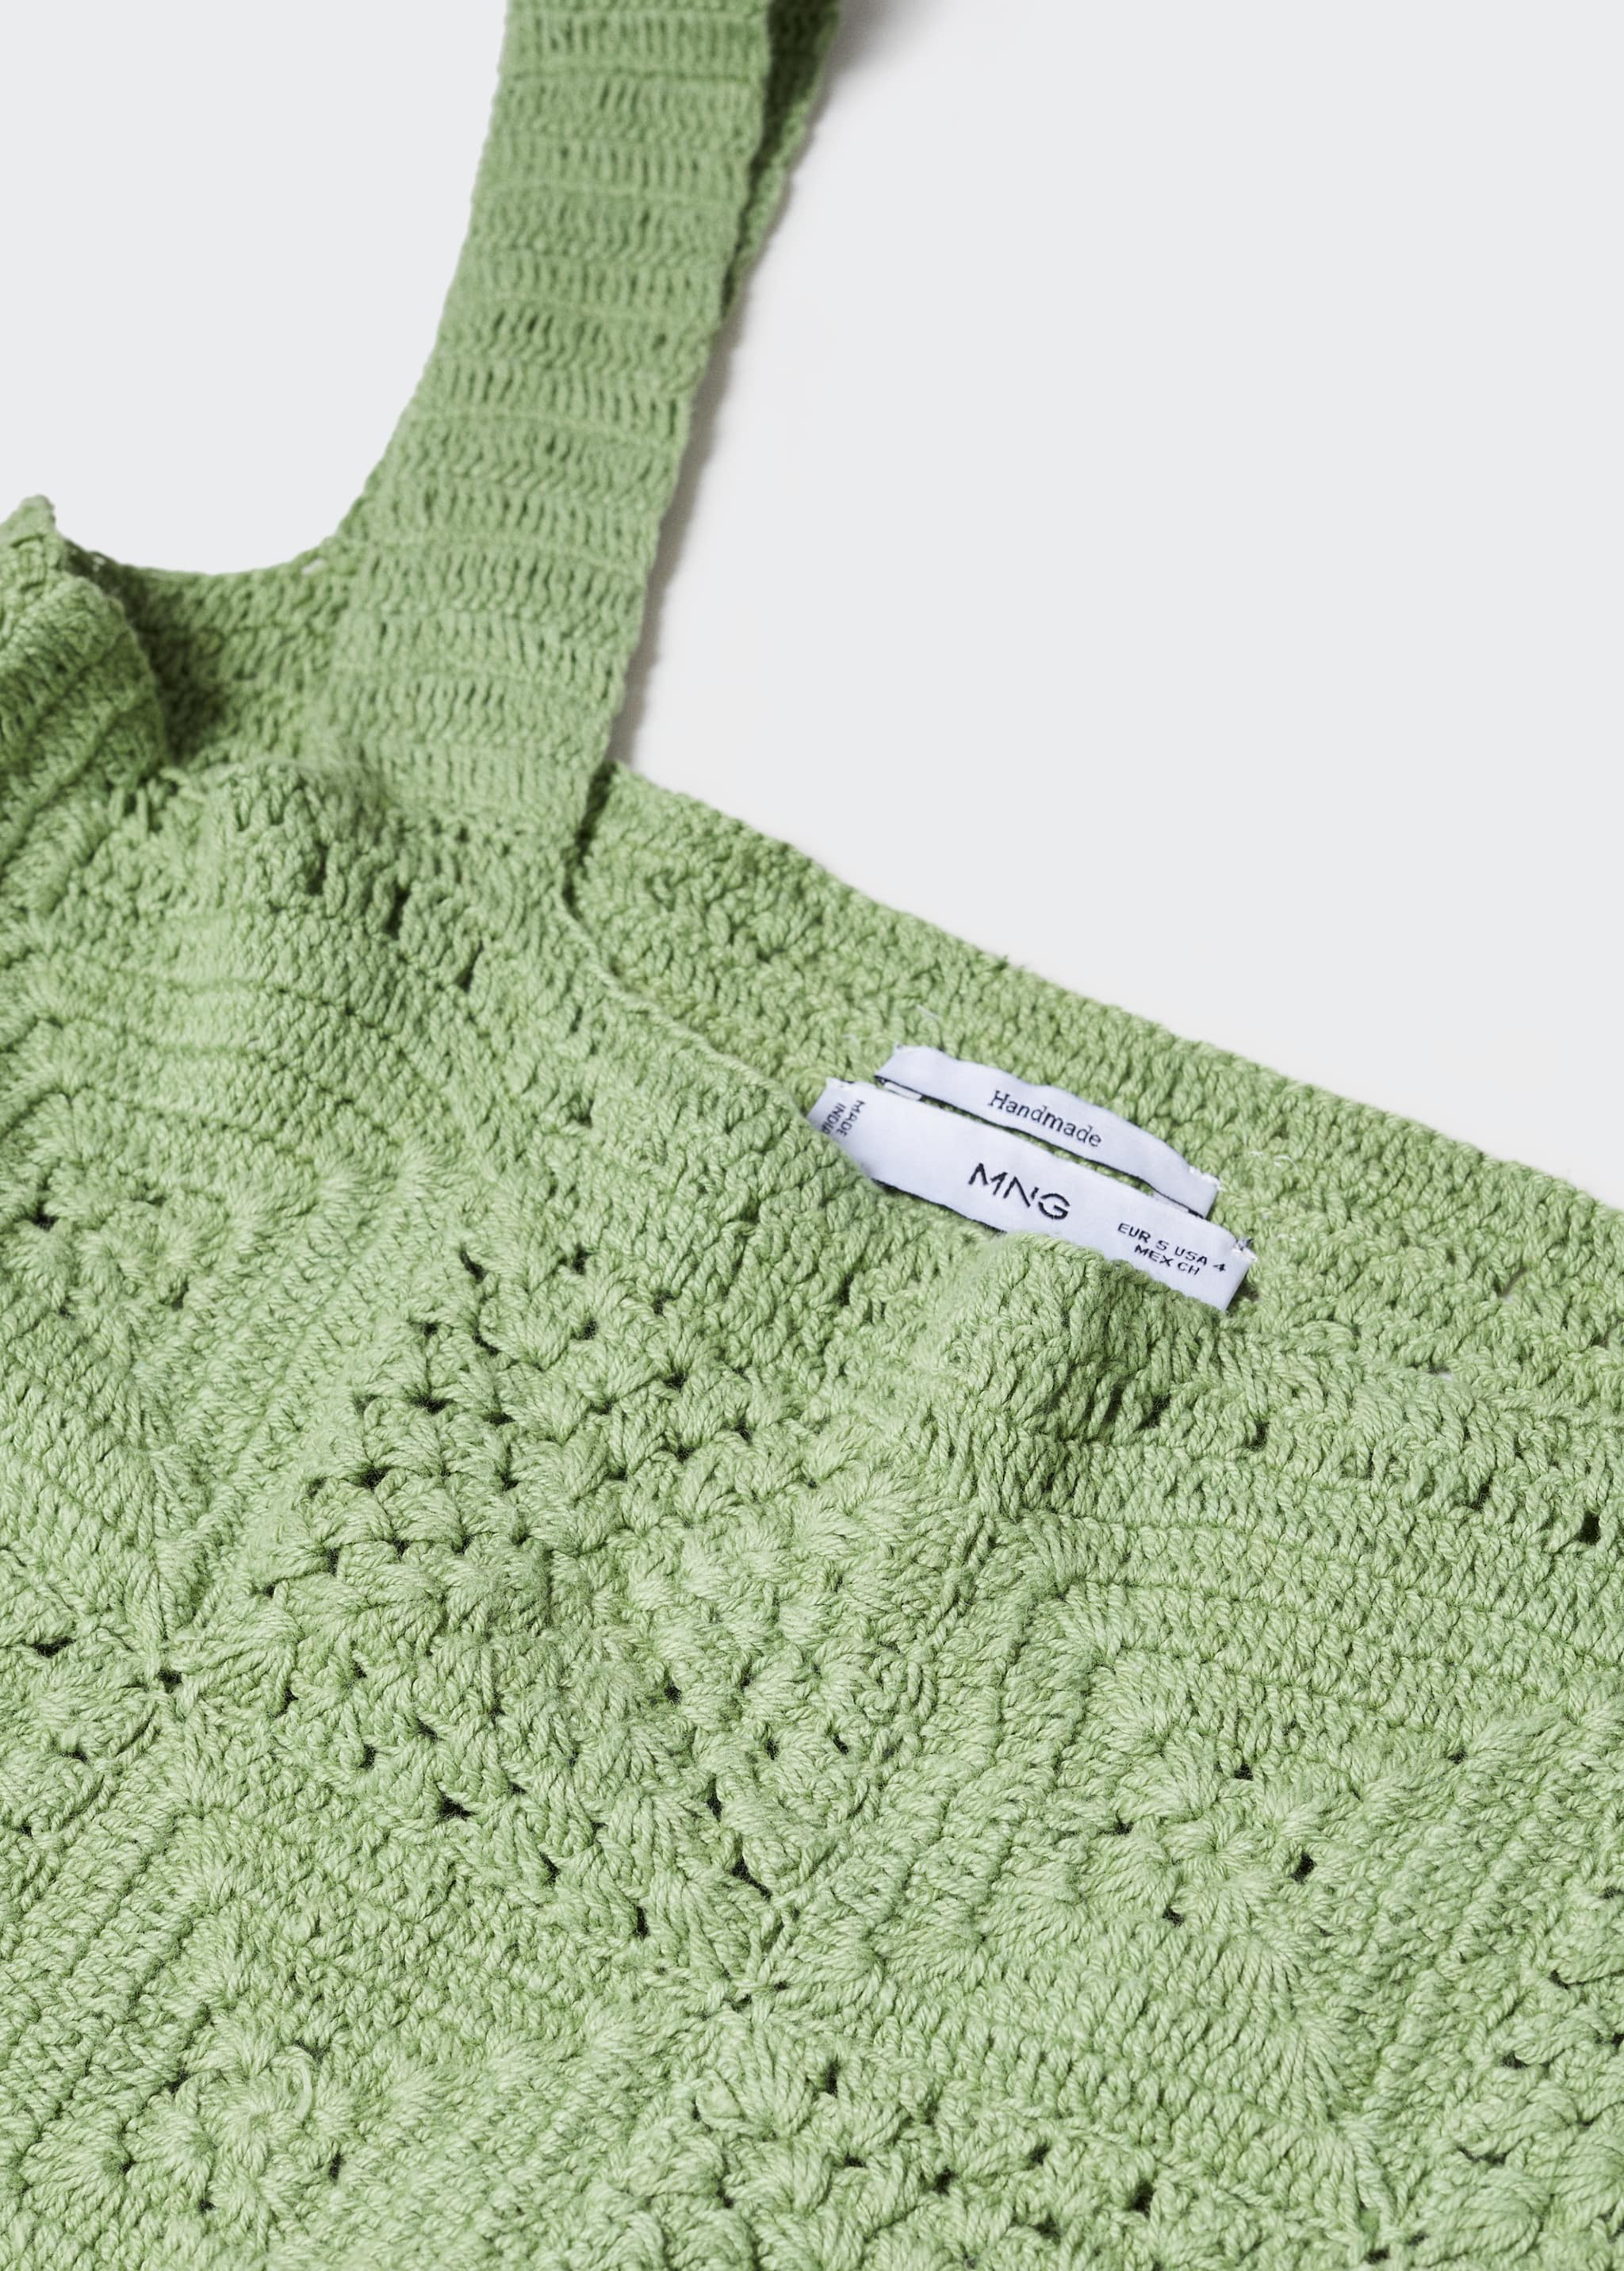 Crochet cotton dress - Details of the article 8